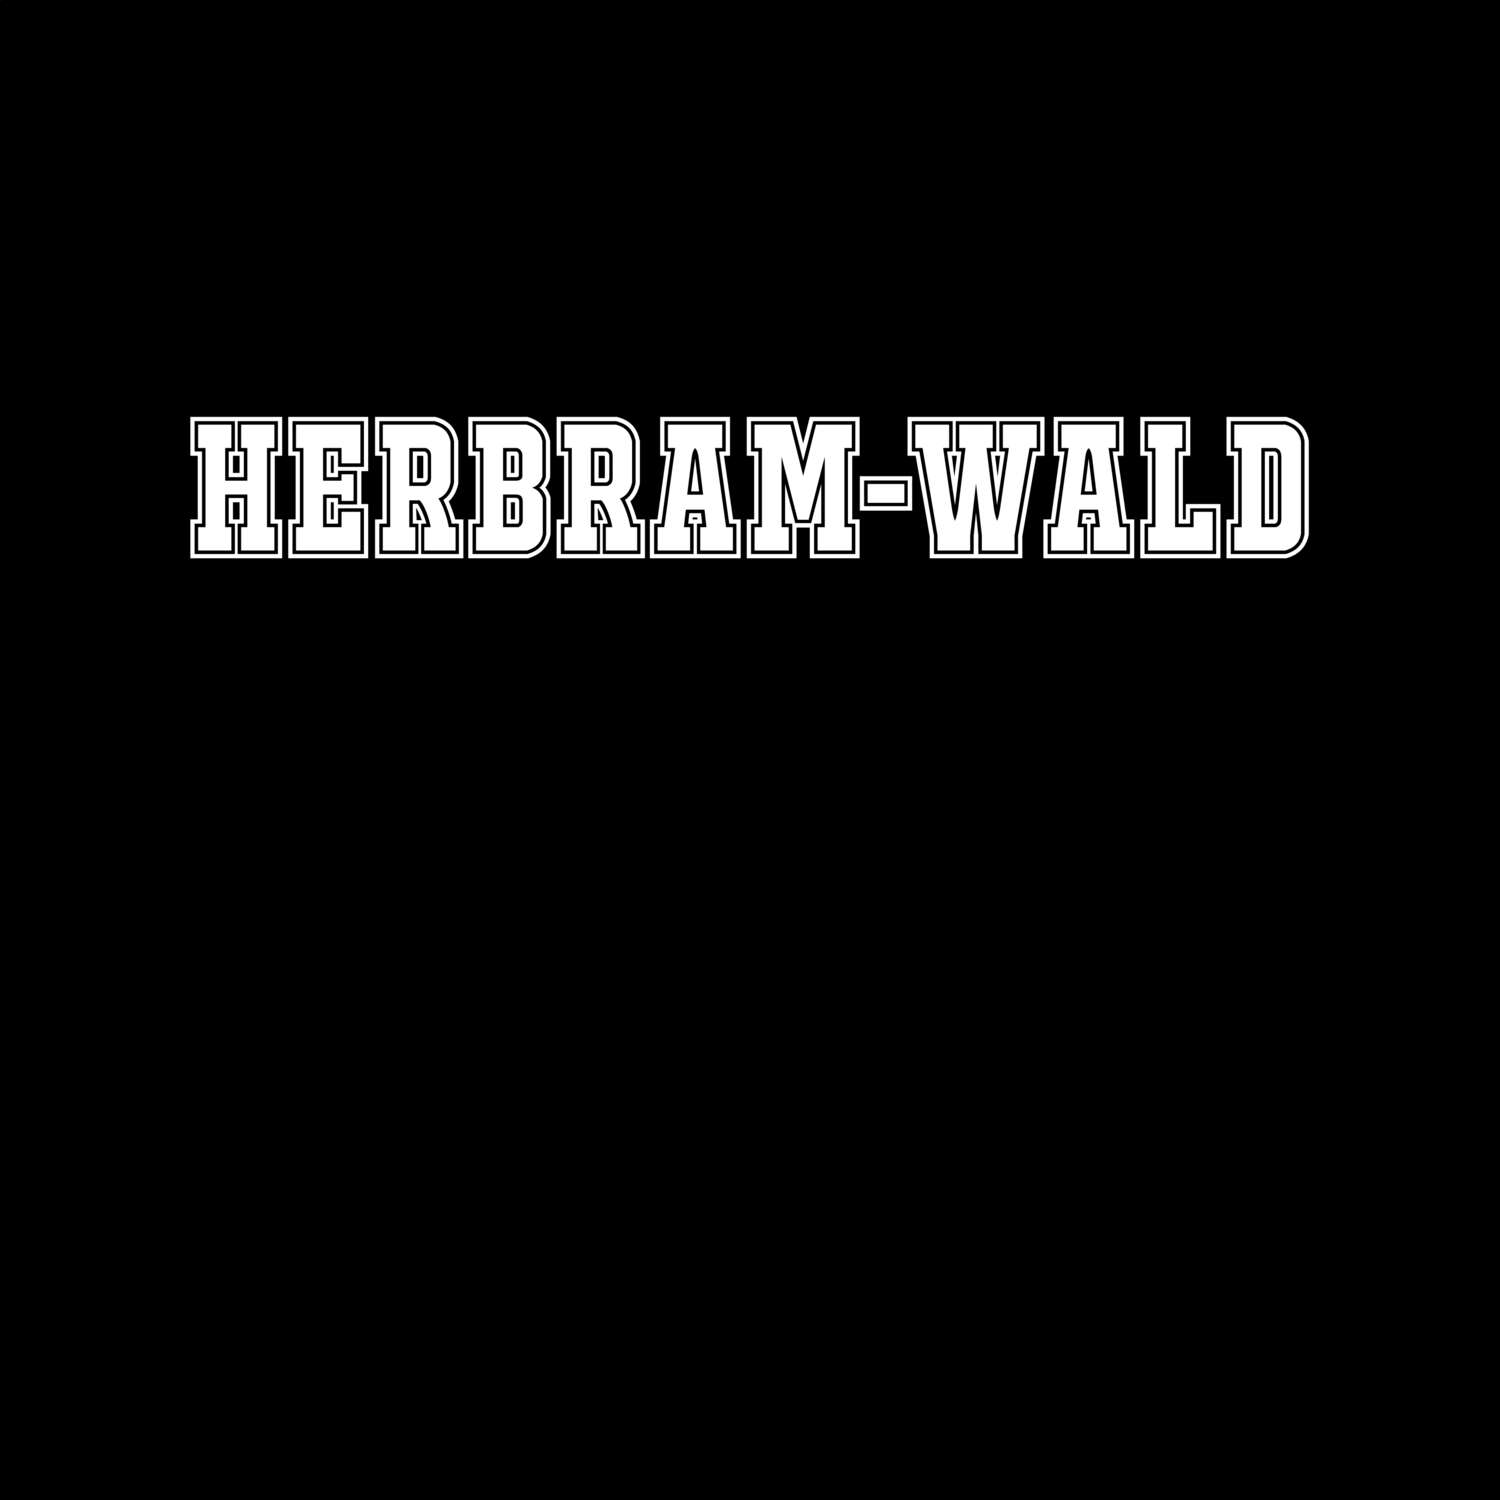 Herbram-Wald T-Shirt »Classic«